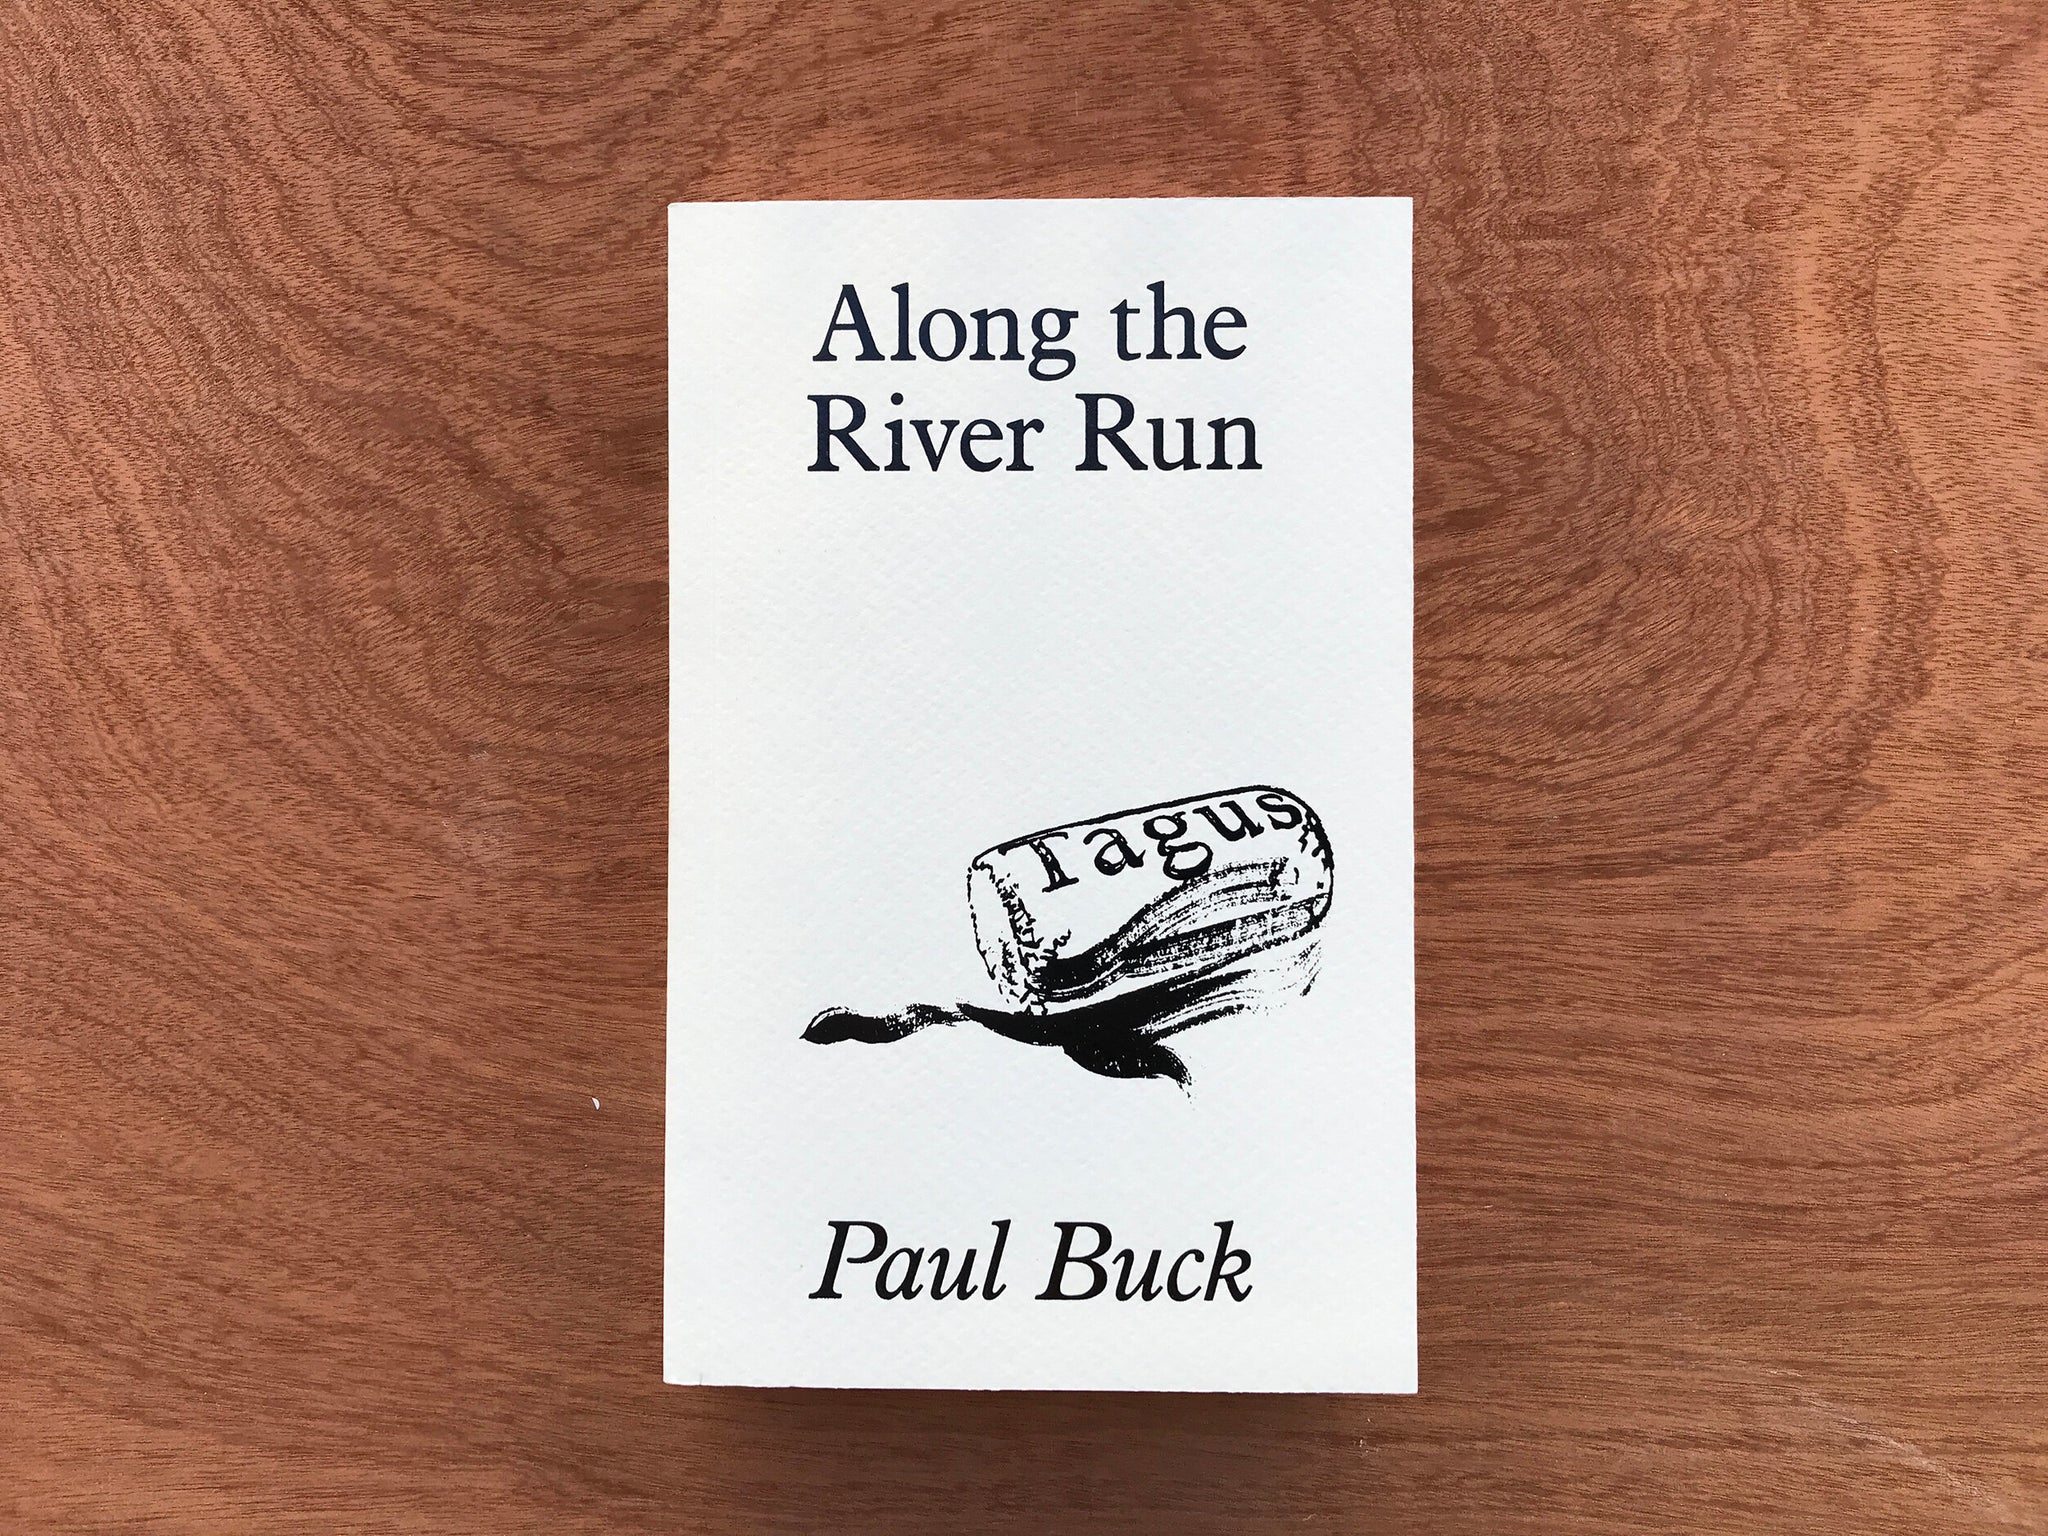 ALONG THE RIVER RUN by Paul Buck